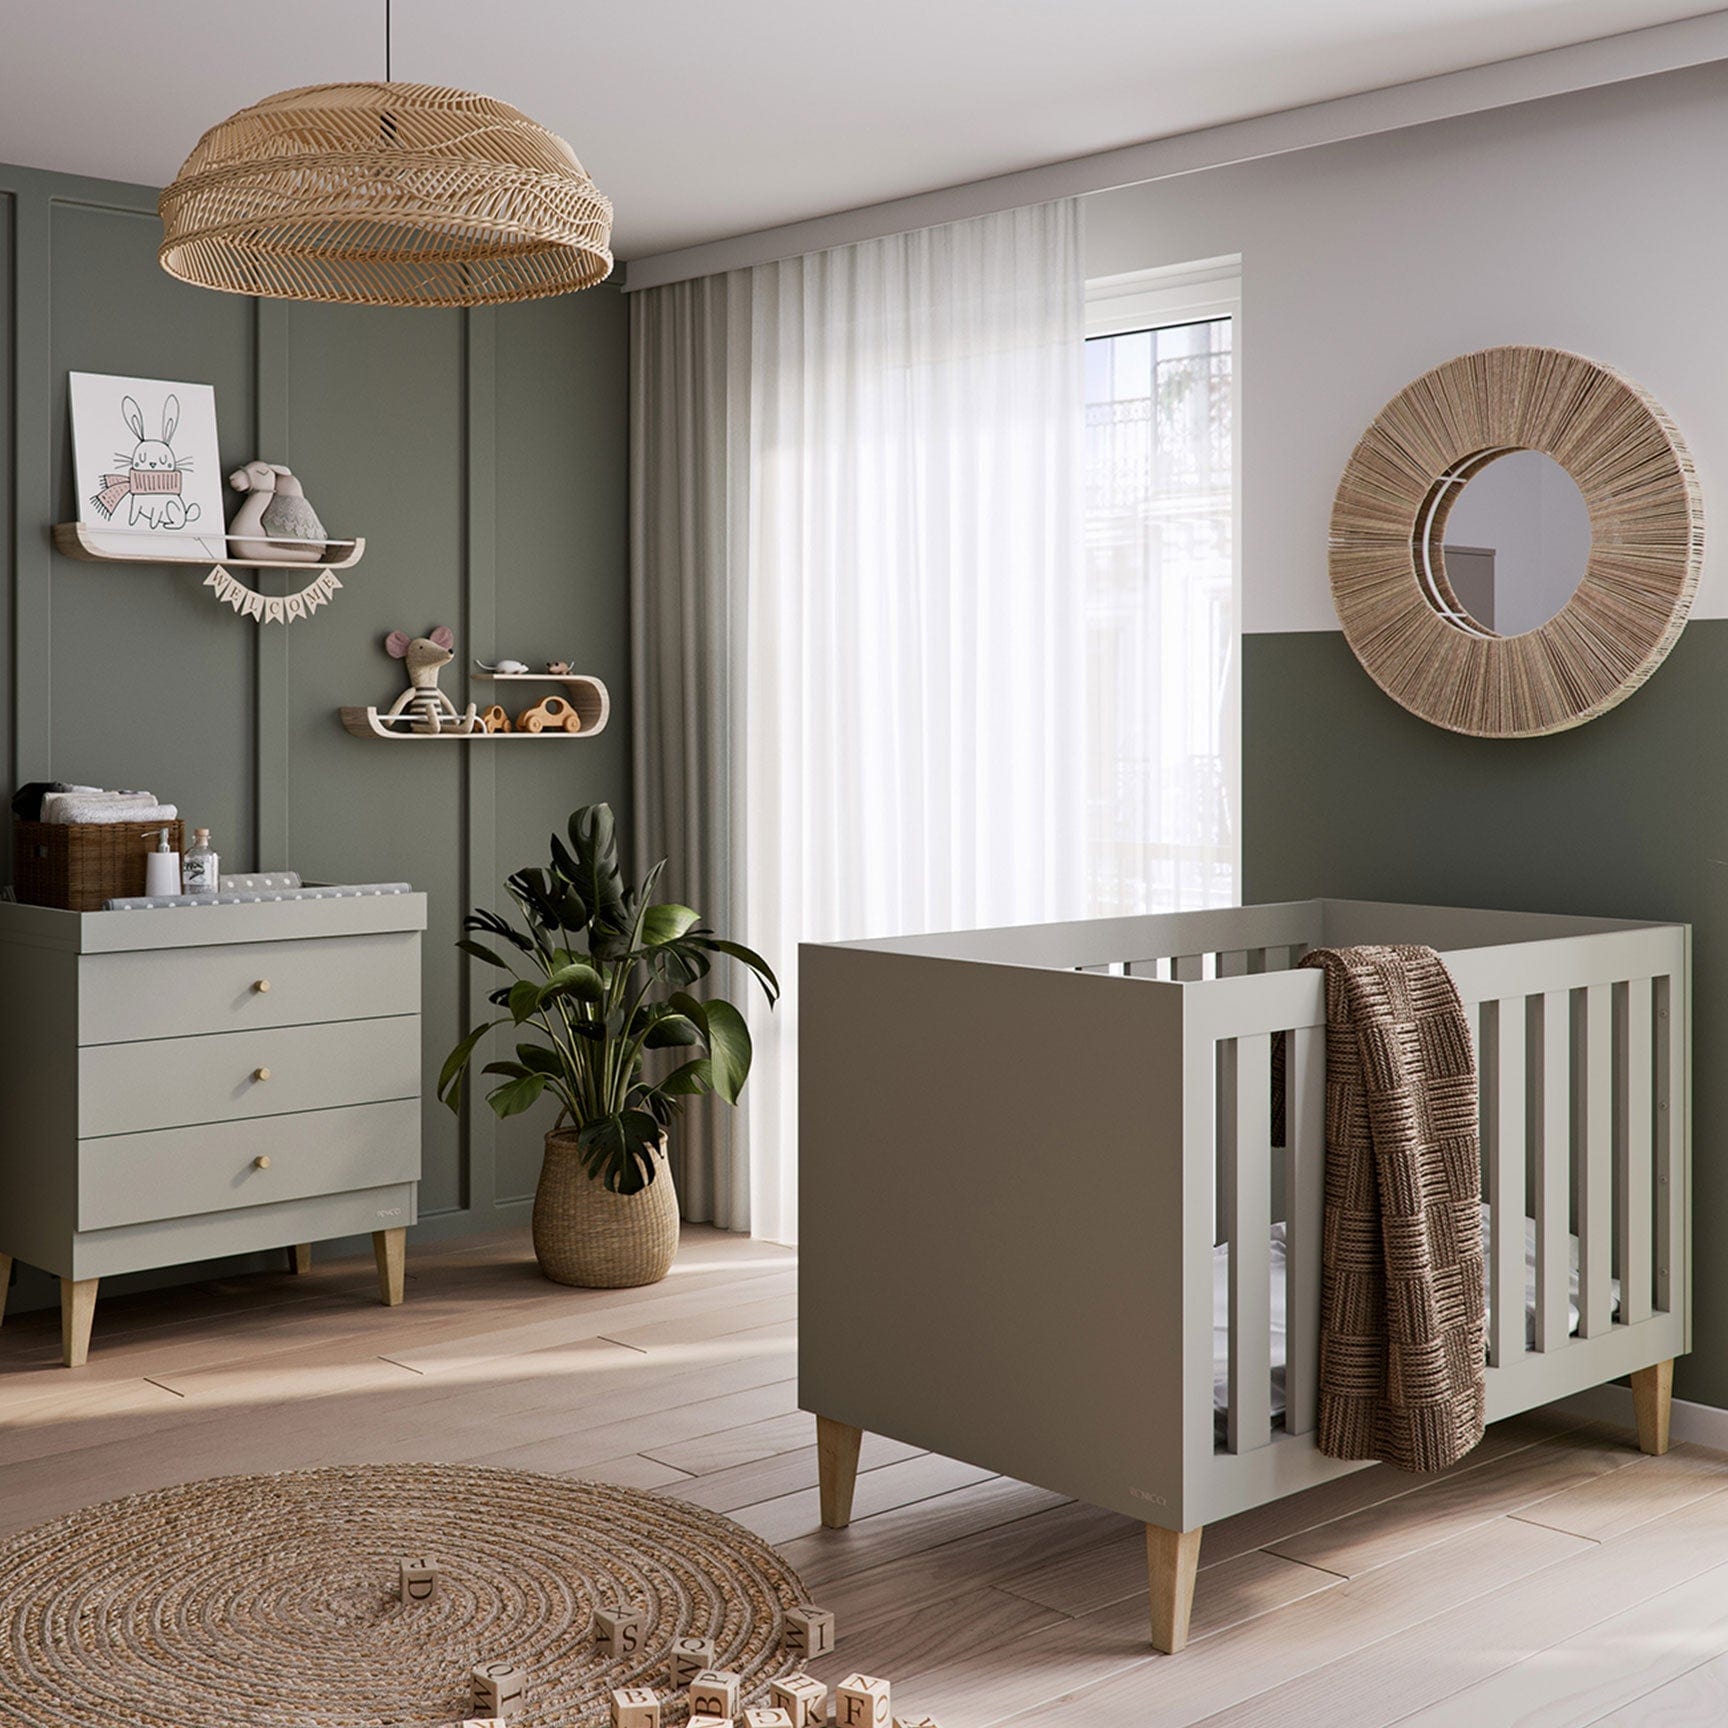 Venicci Saluzzo 2 Piece Dresser Roomset in Warm Grey Nursery Room Sets